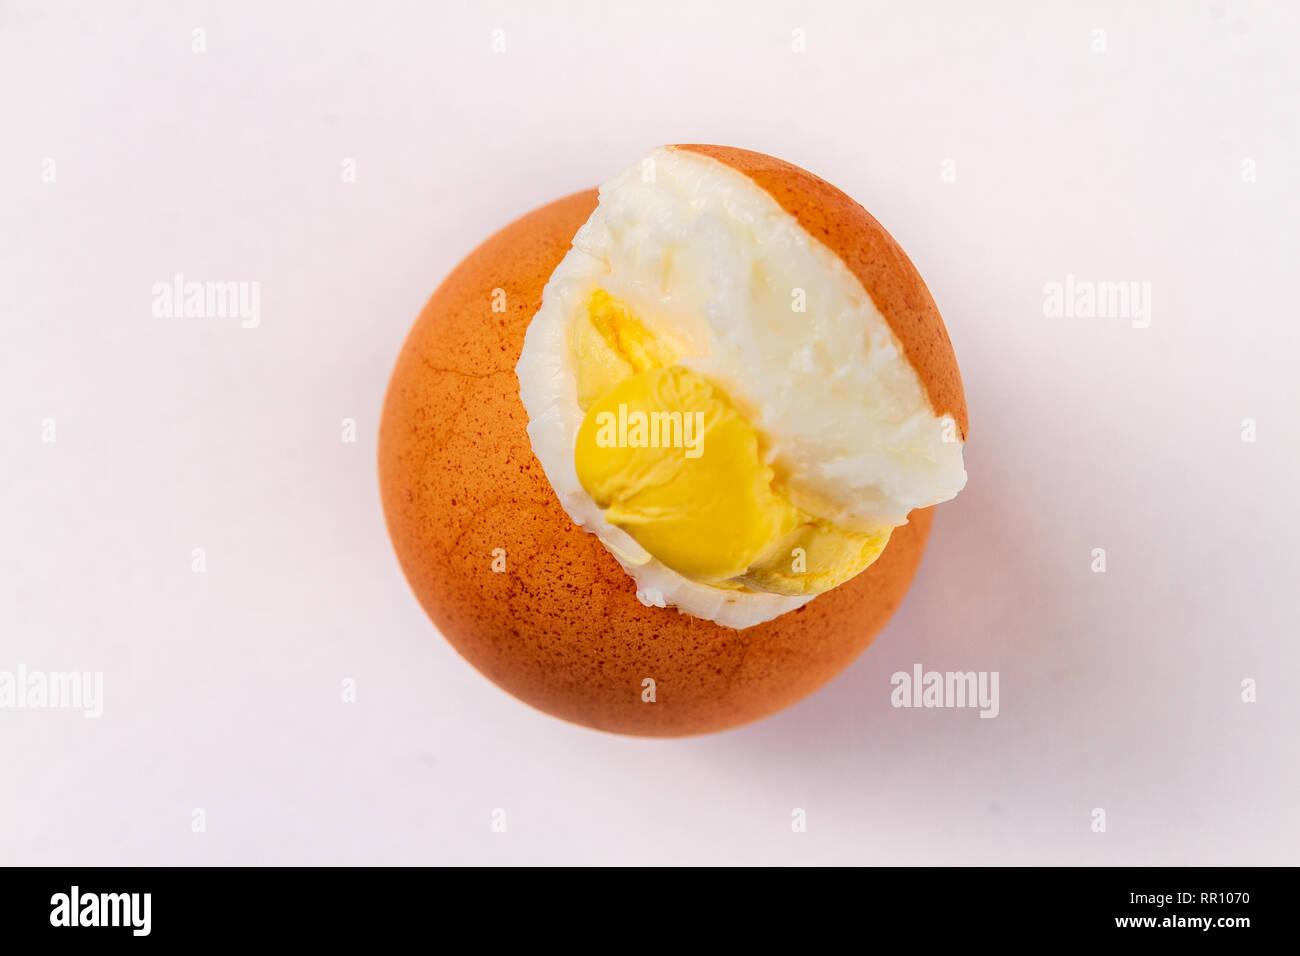 Cracked exploded egg with yoke showing isolated on a white background Stock Photo